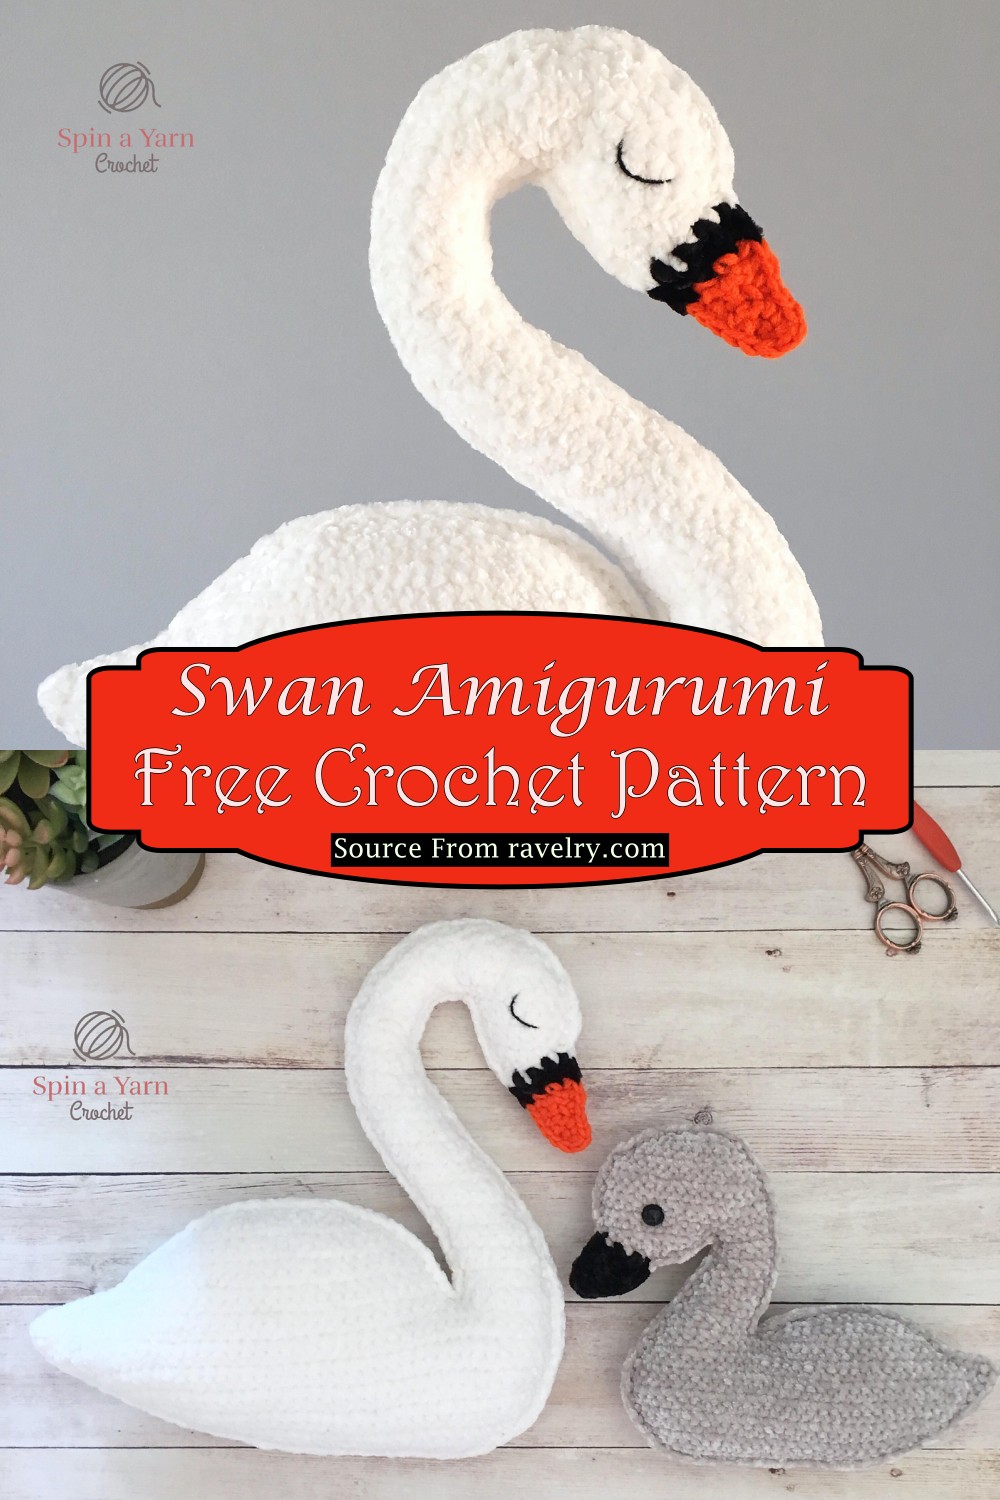 Swan Amigurumi